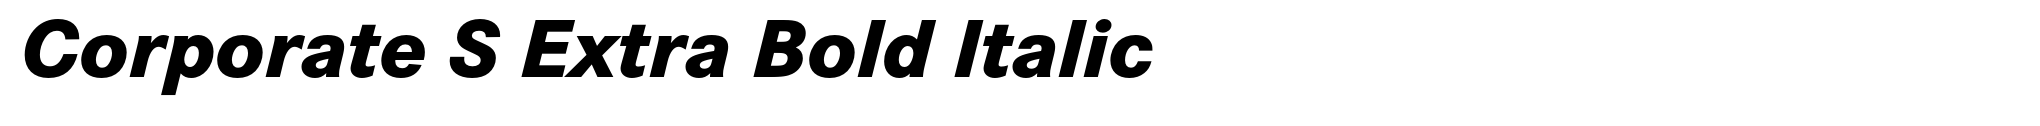 Corporate S Extra Bold Italic image